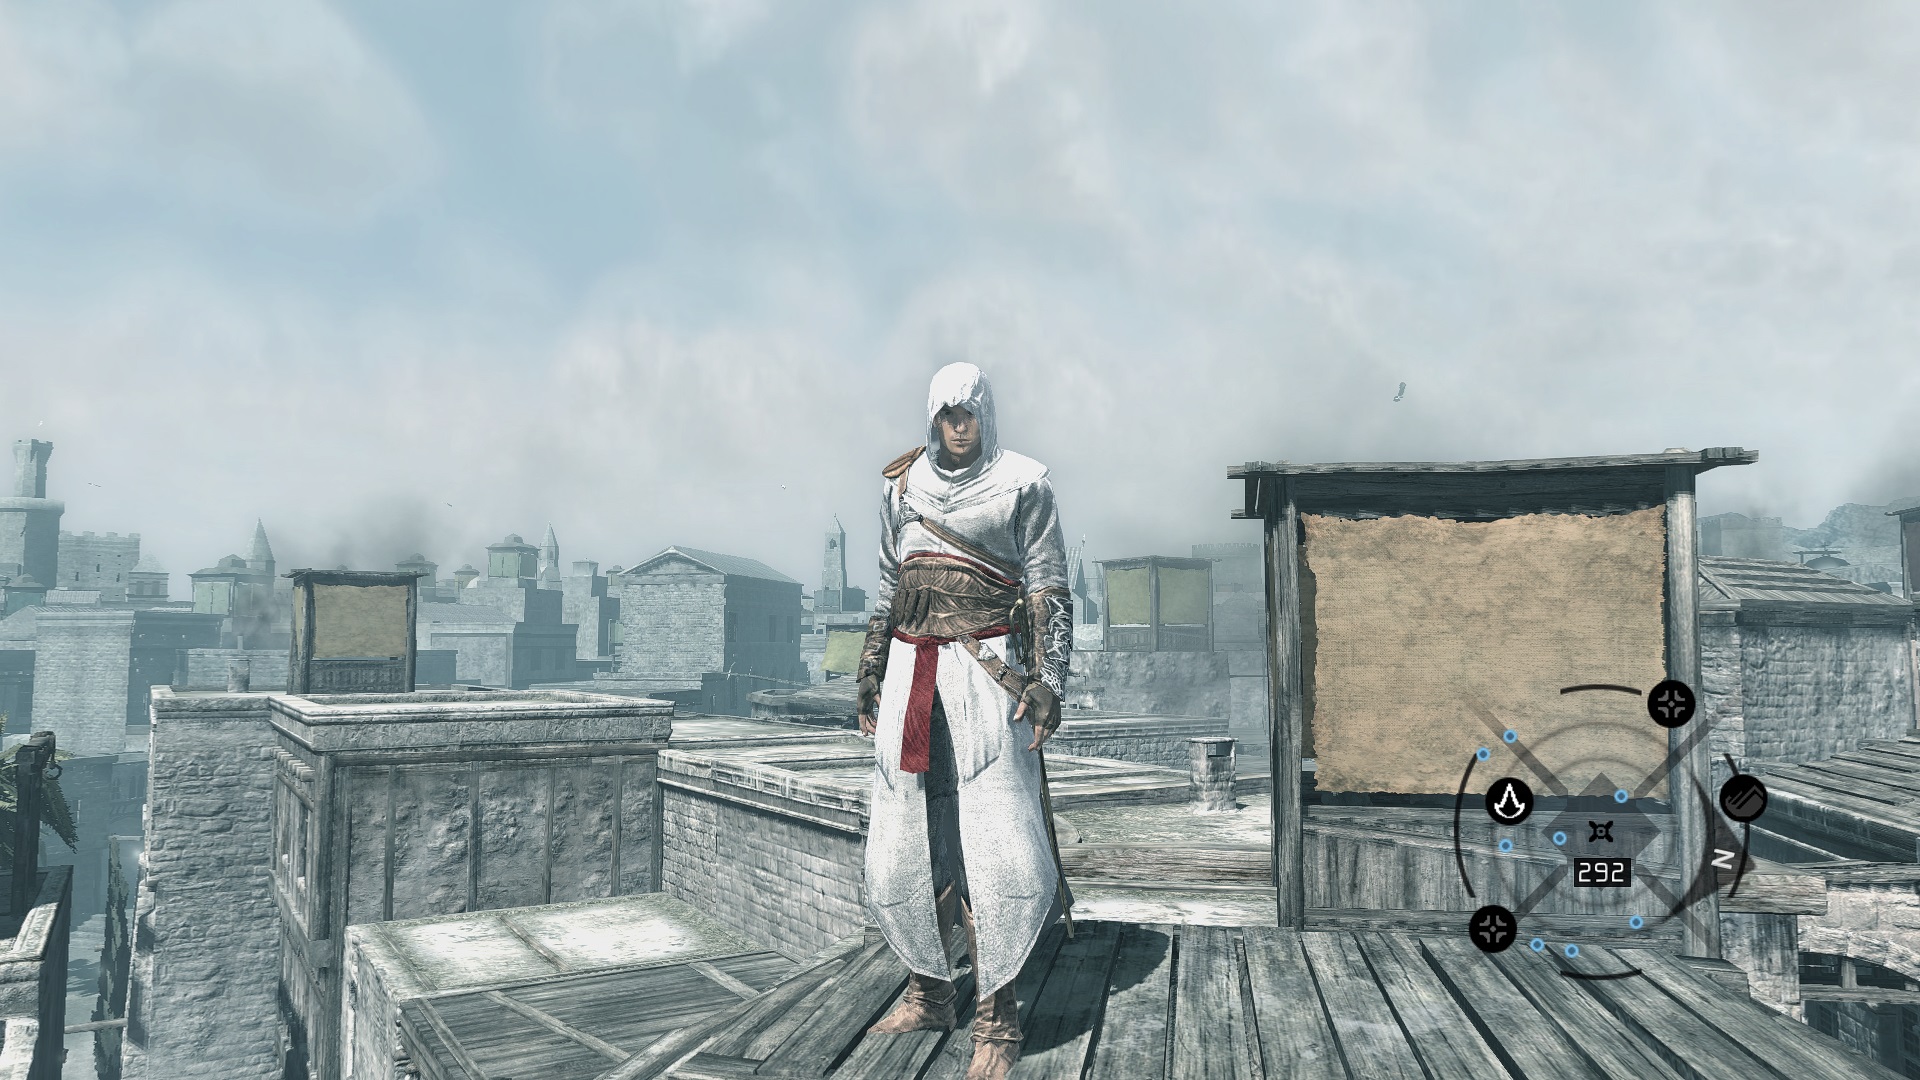 Assassin's Creed overhaul mod - ModDB